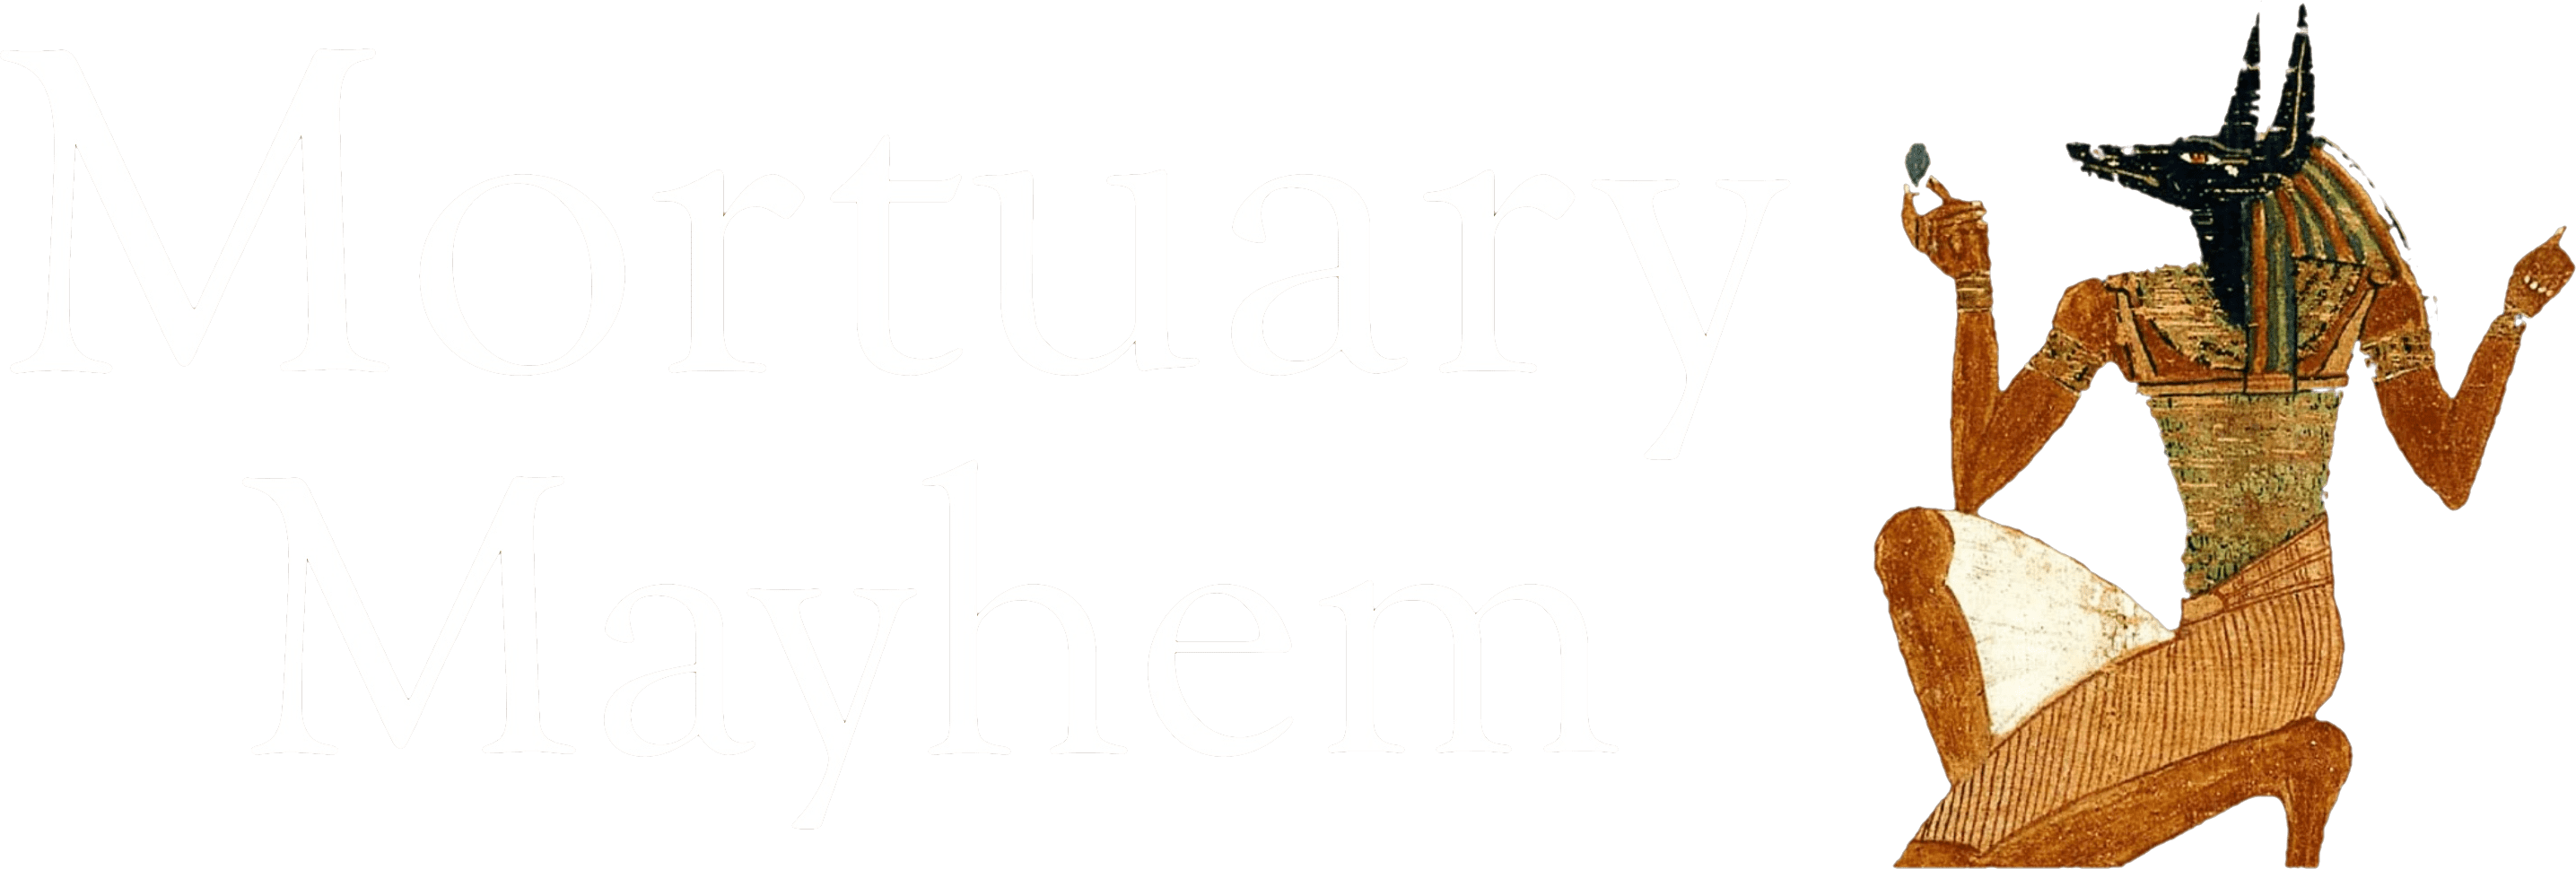 Mortuary Mayhem Logo with Anubis kneeling to the right and mortuary mayhem words to the left.